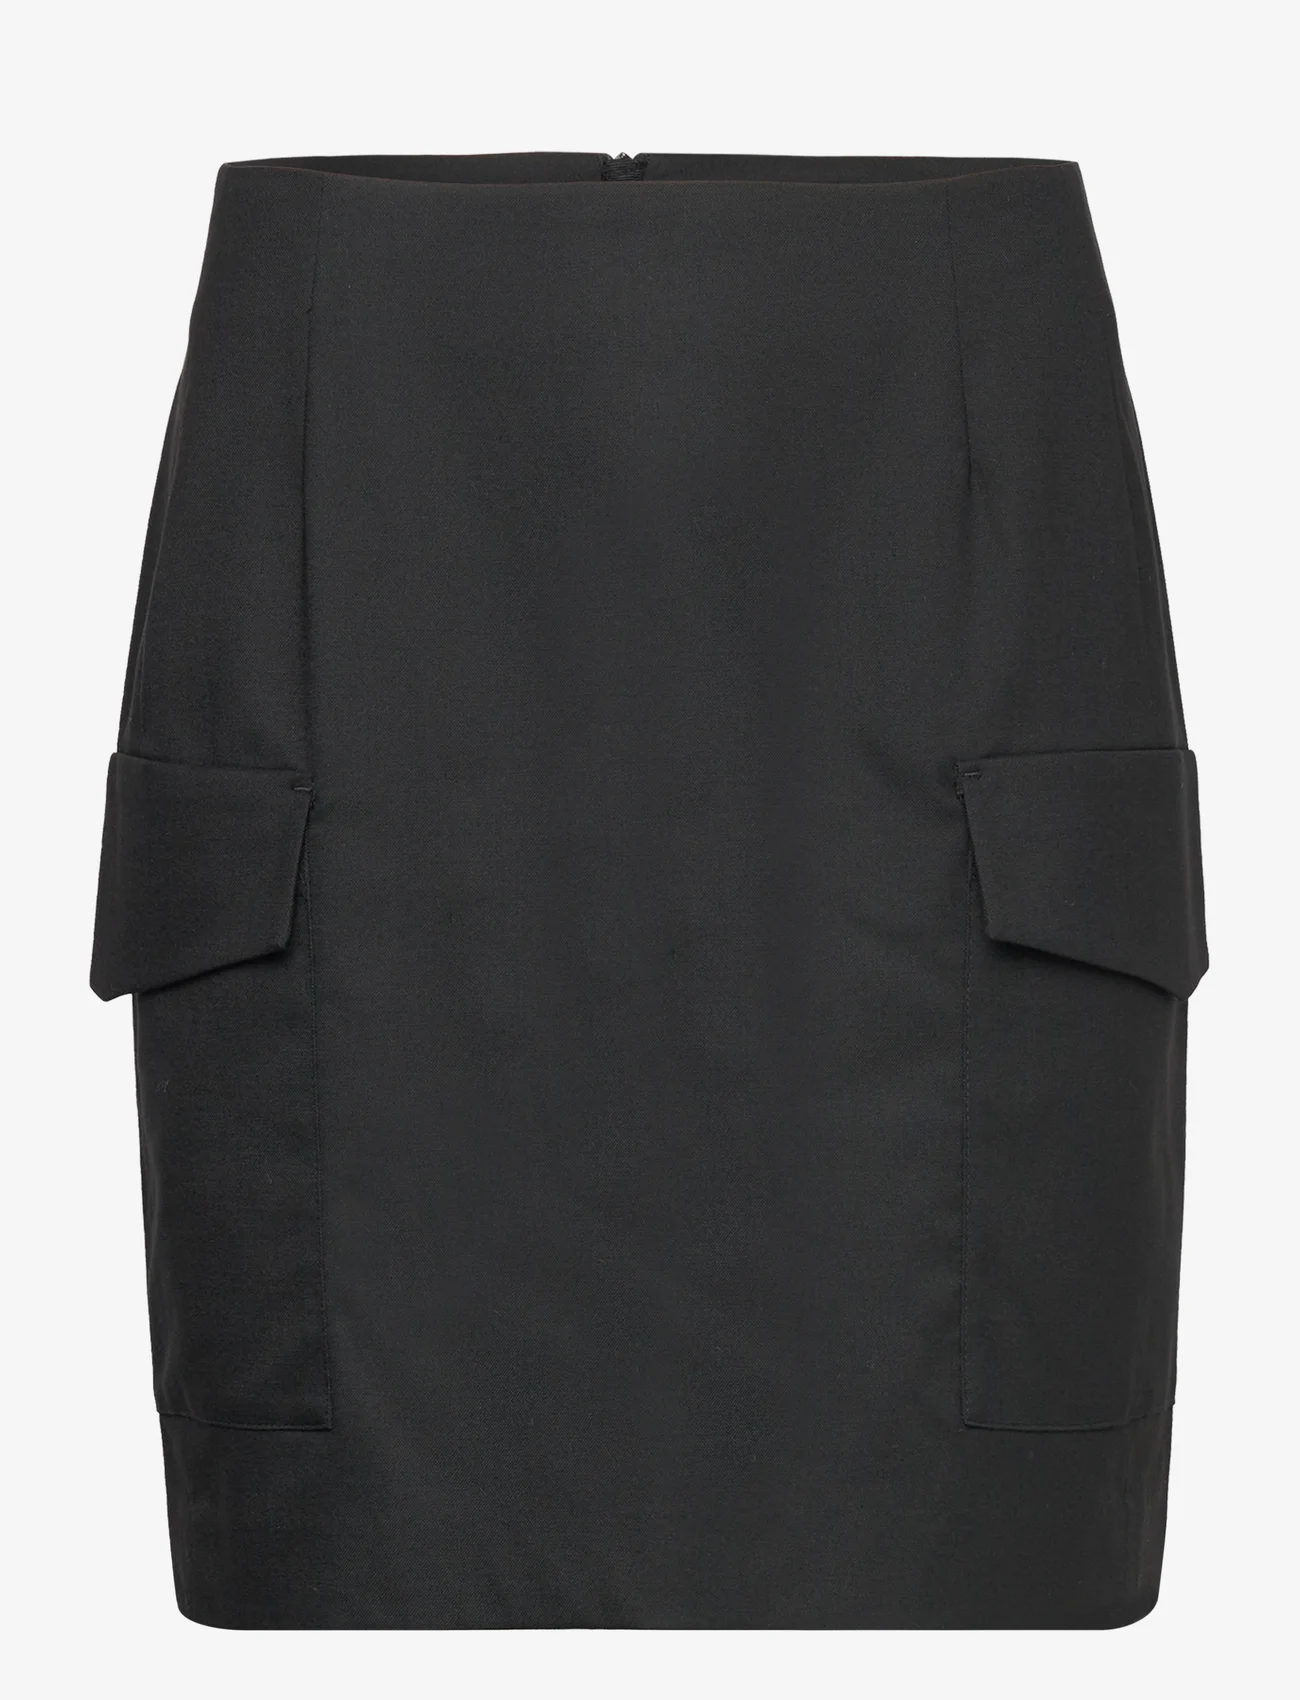 InWear - WaiIW Skirt - korte nederdele - black - 0